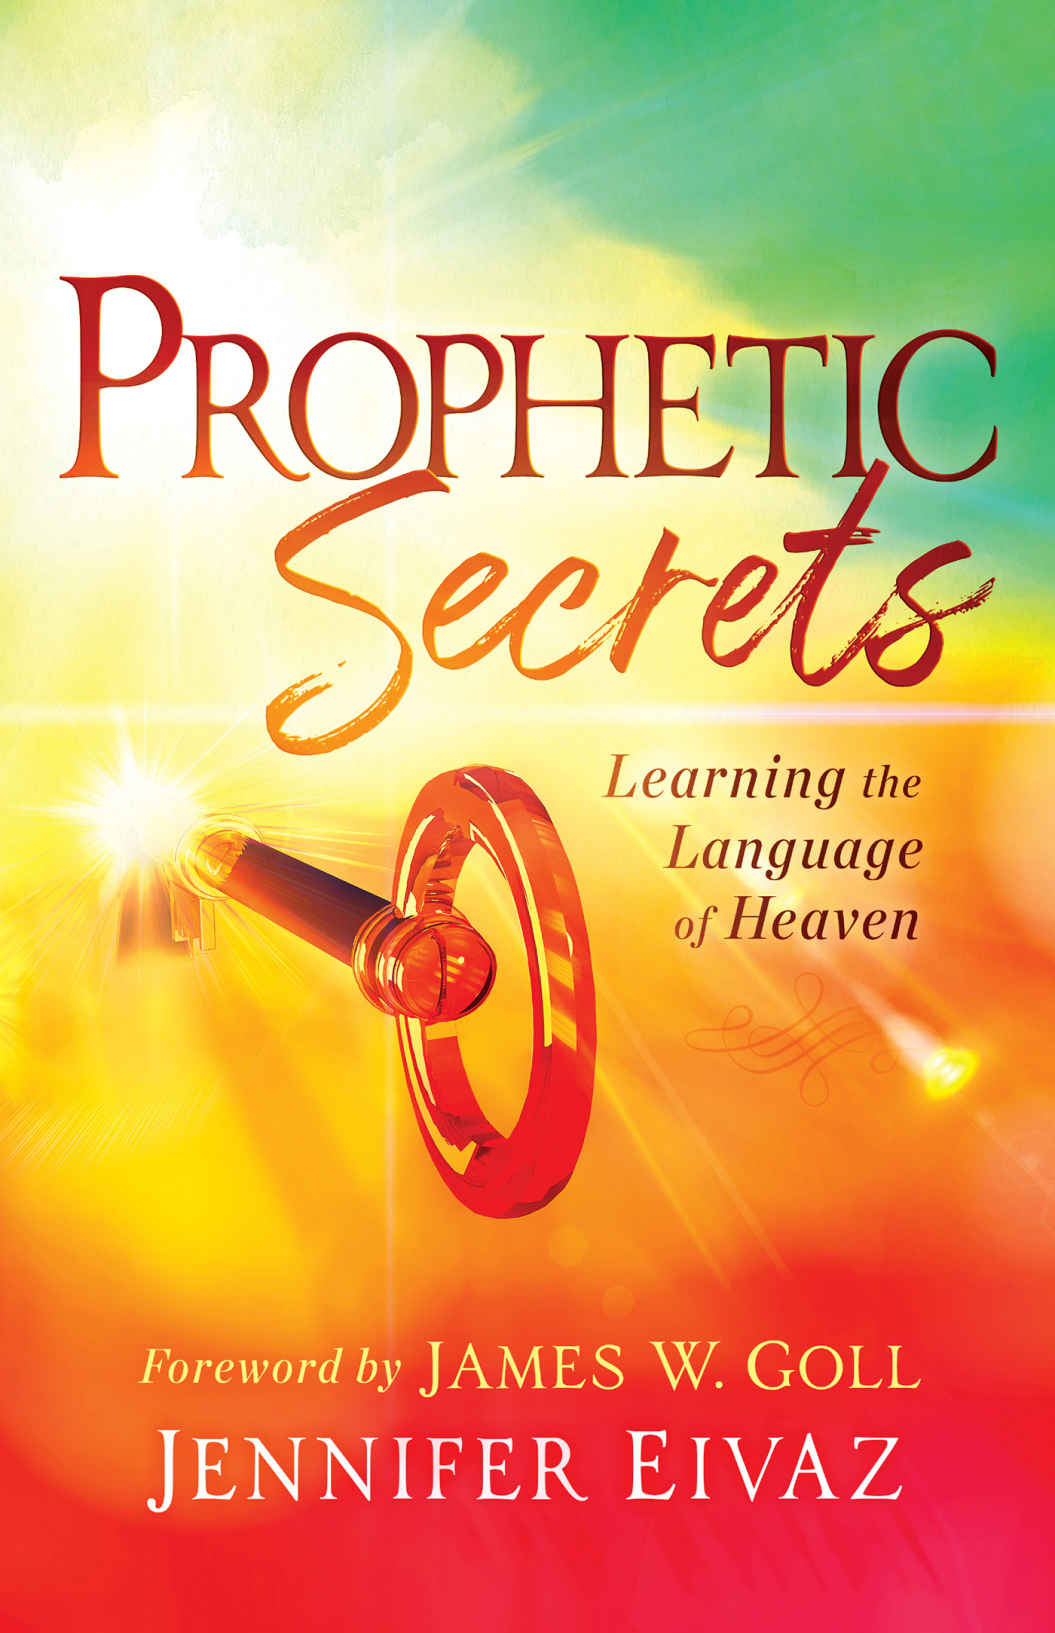 Prophetic Secrets